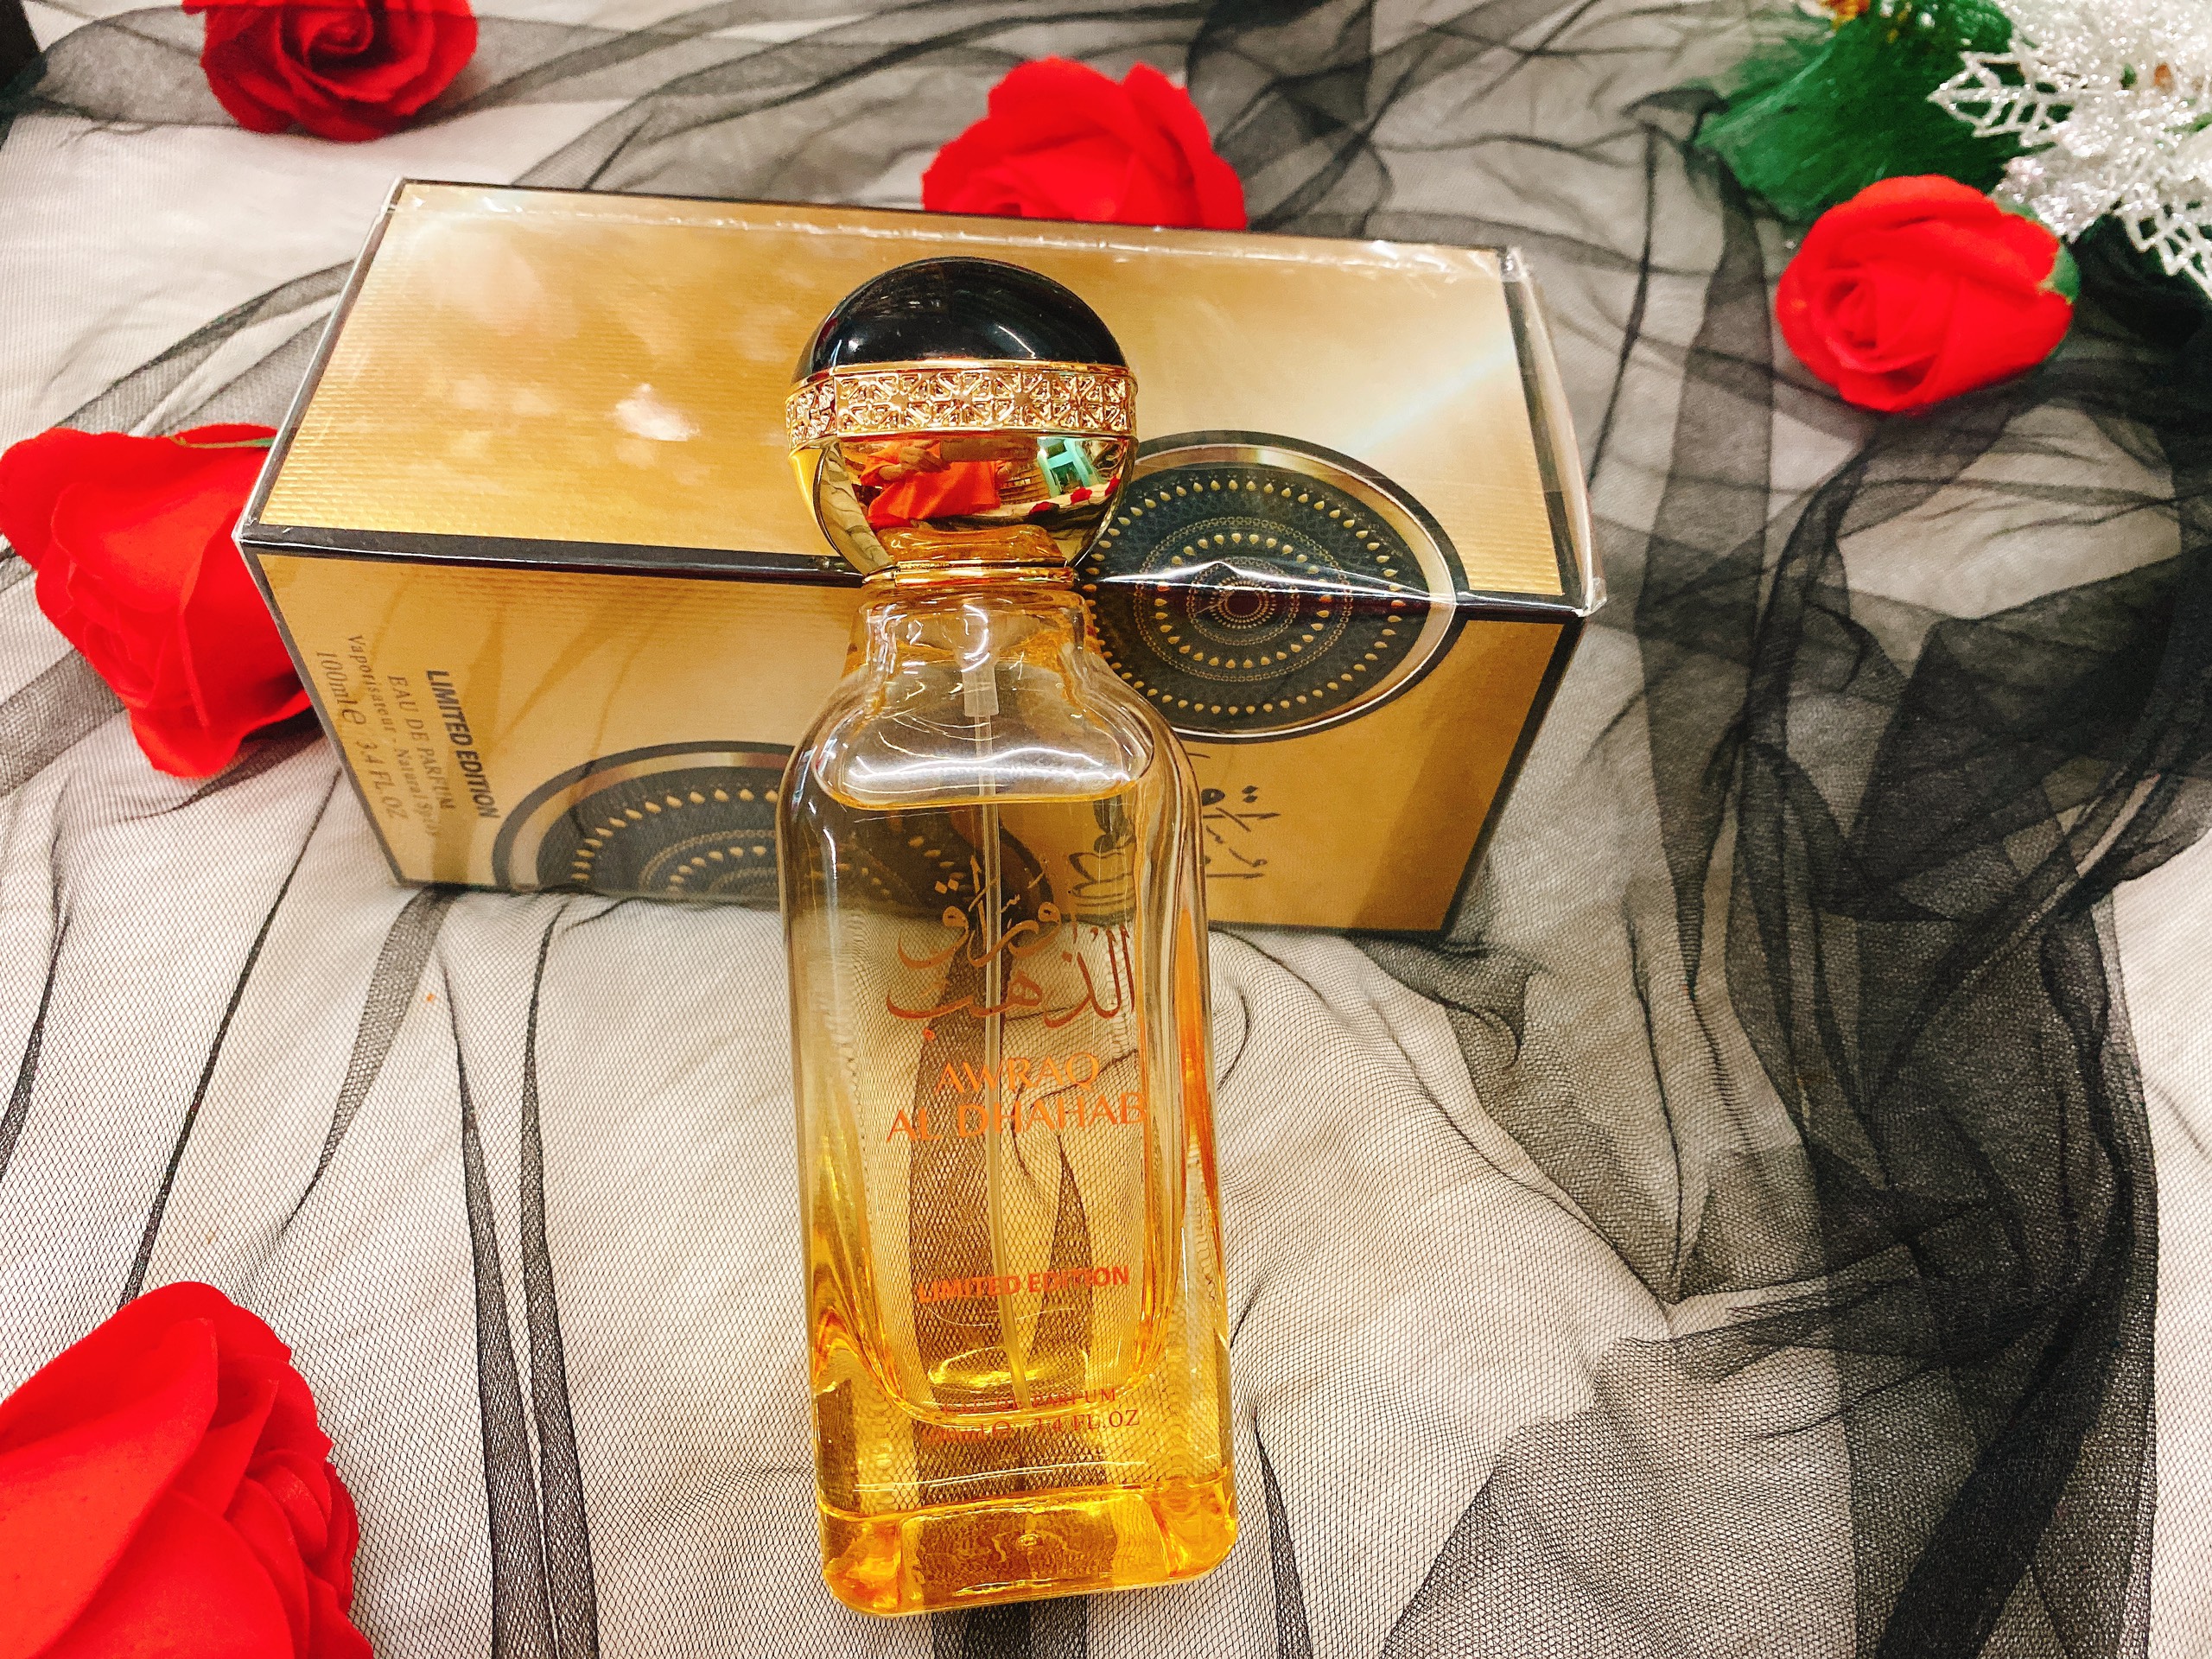 Awaken your sensuality with Dubai Fancy perfume - DUBAI FANCY PERFUME OIL